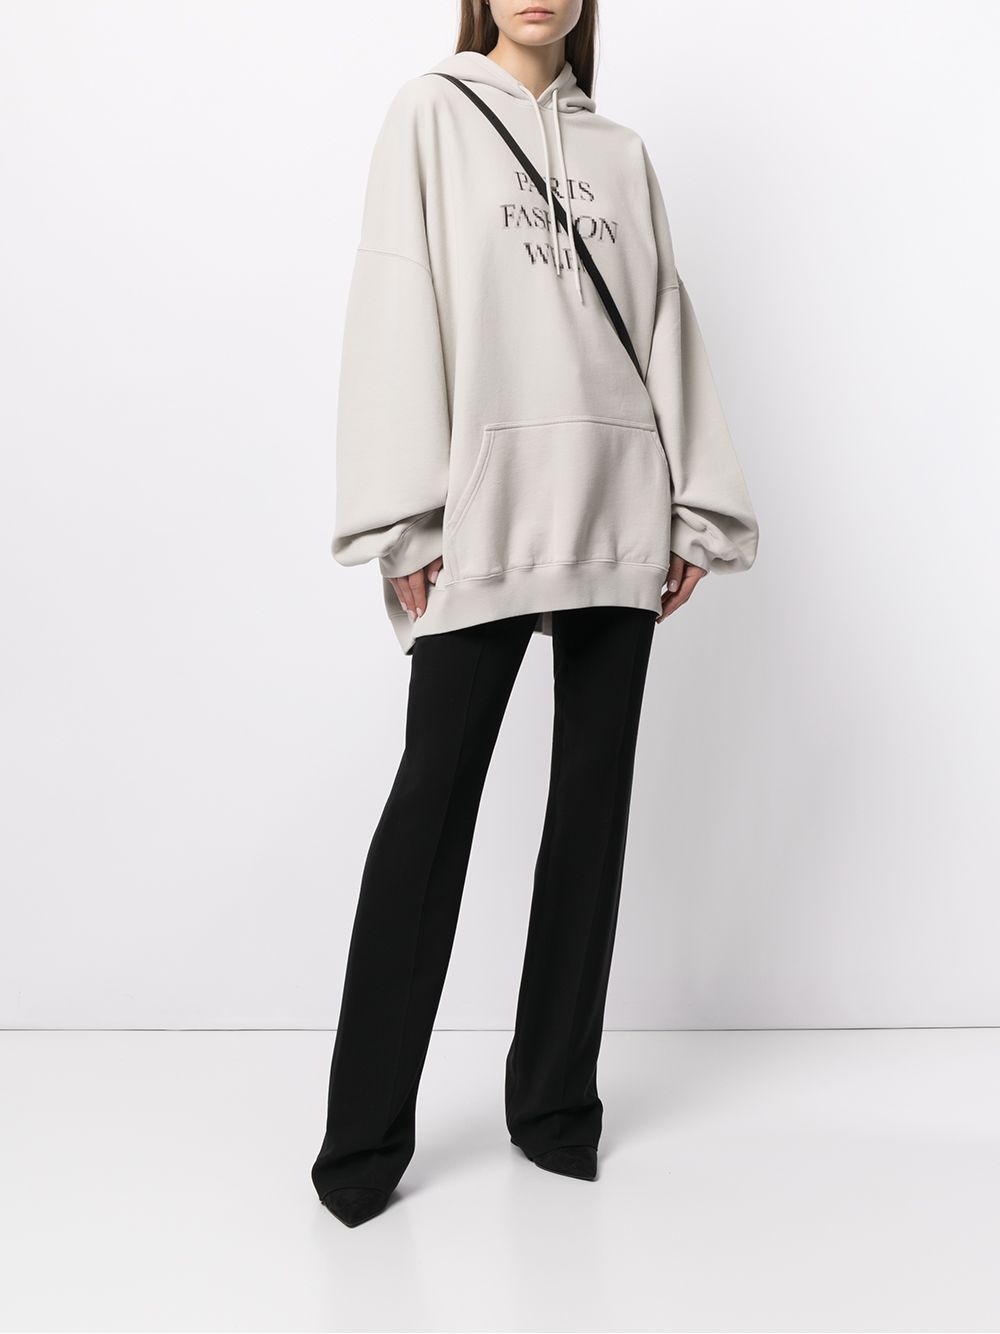 фото Balenciaga paris fashion week overesized hoodie